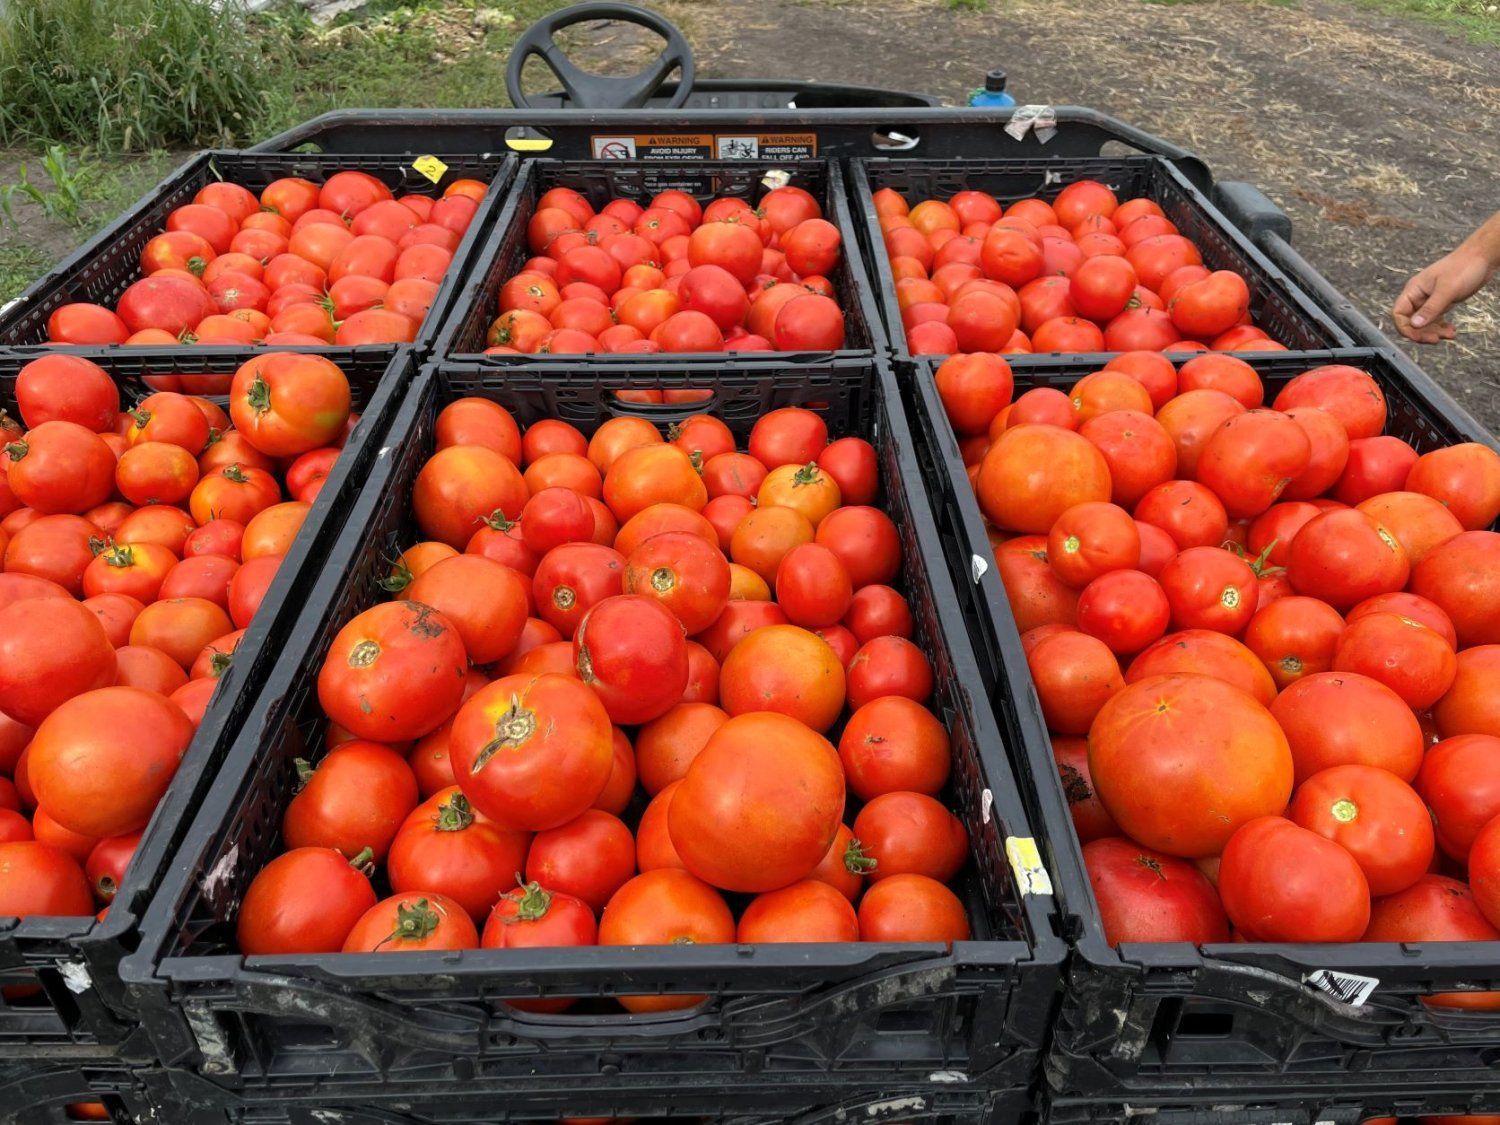 Previous Happening: Peak Tomatoes & U of MN Tomato Study on Our Farm